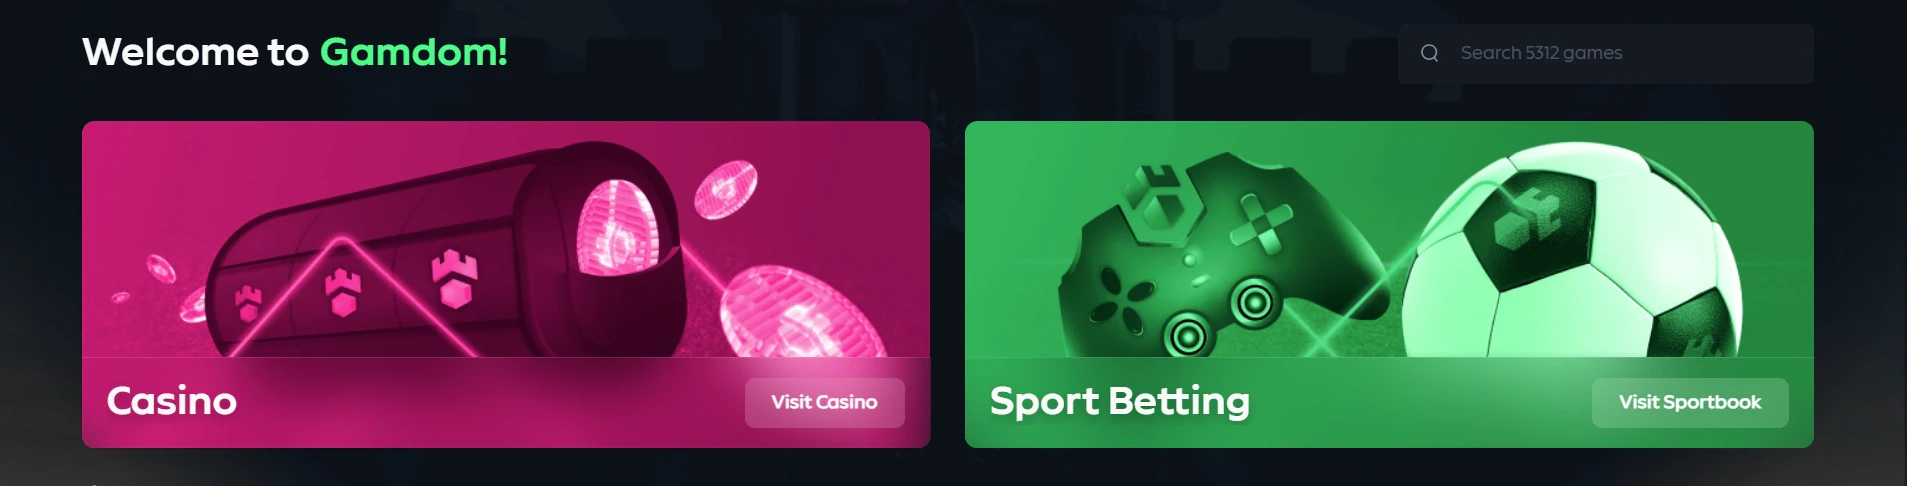 Gamdom Casino and Sports